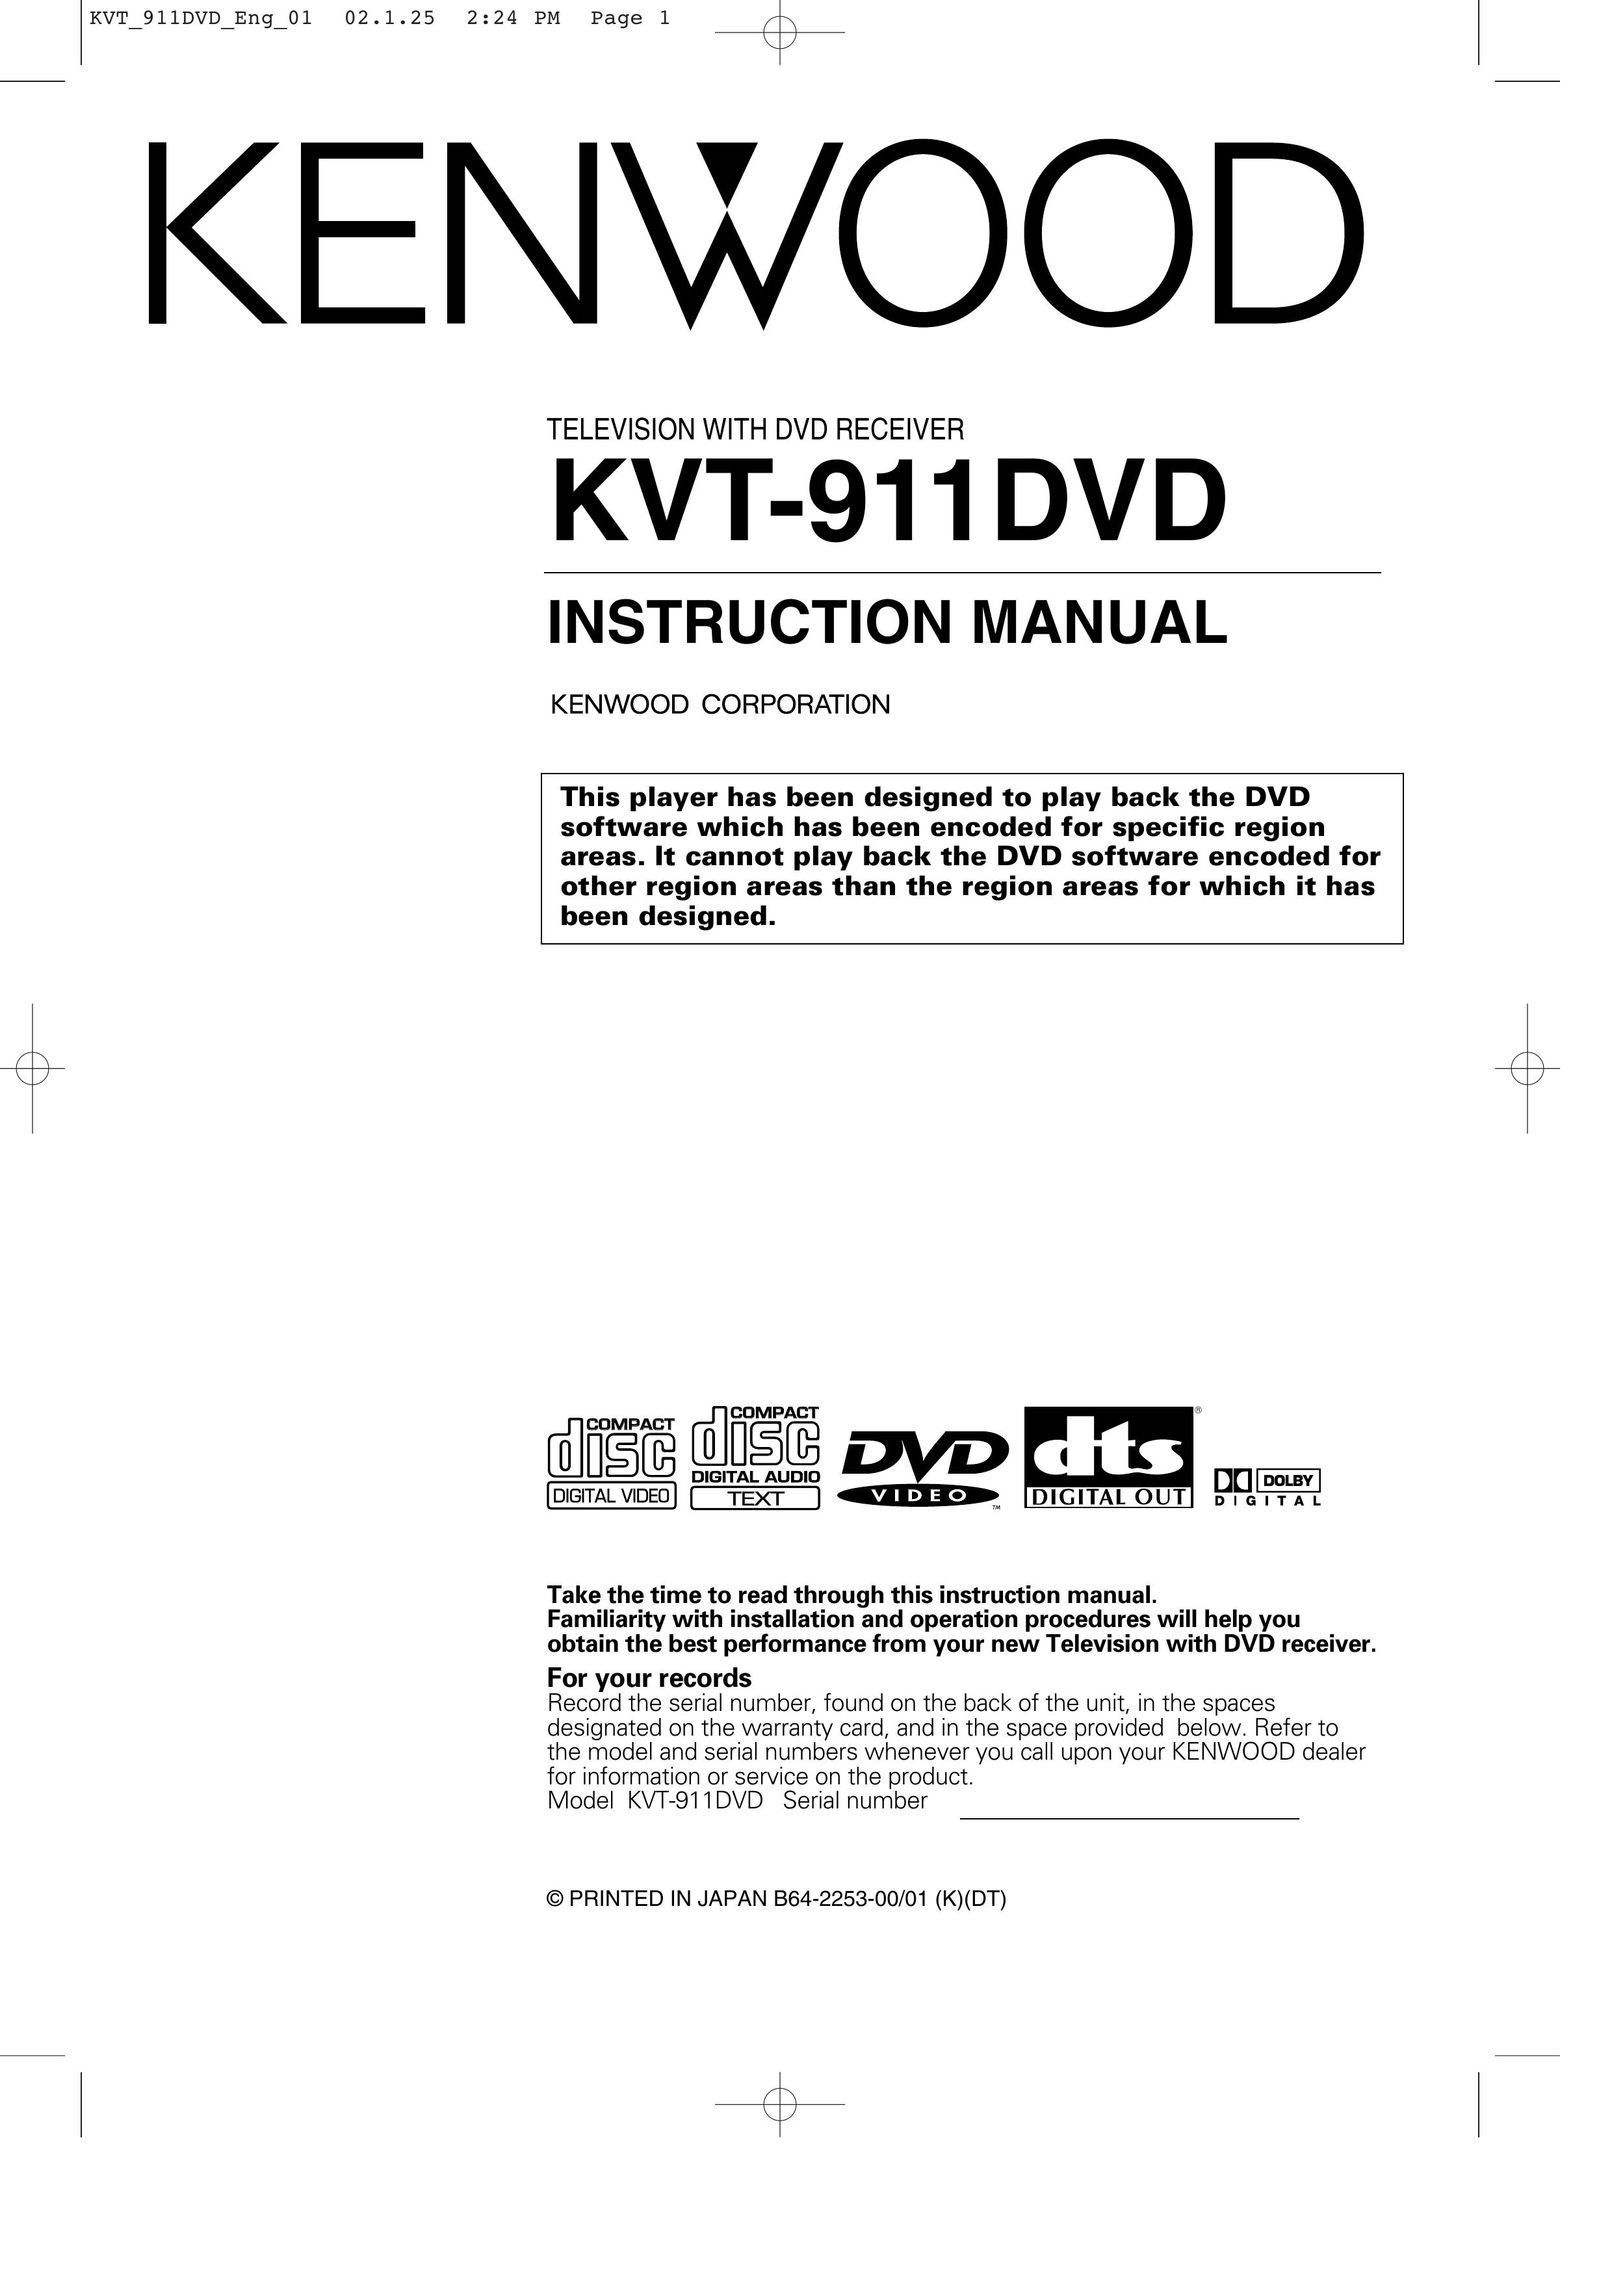 Kenwood KVT-911DVD TV DVD Combo User Manual